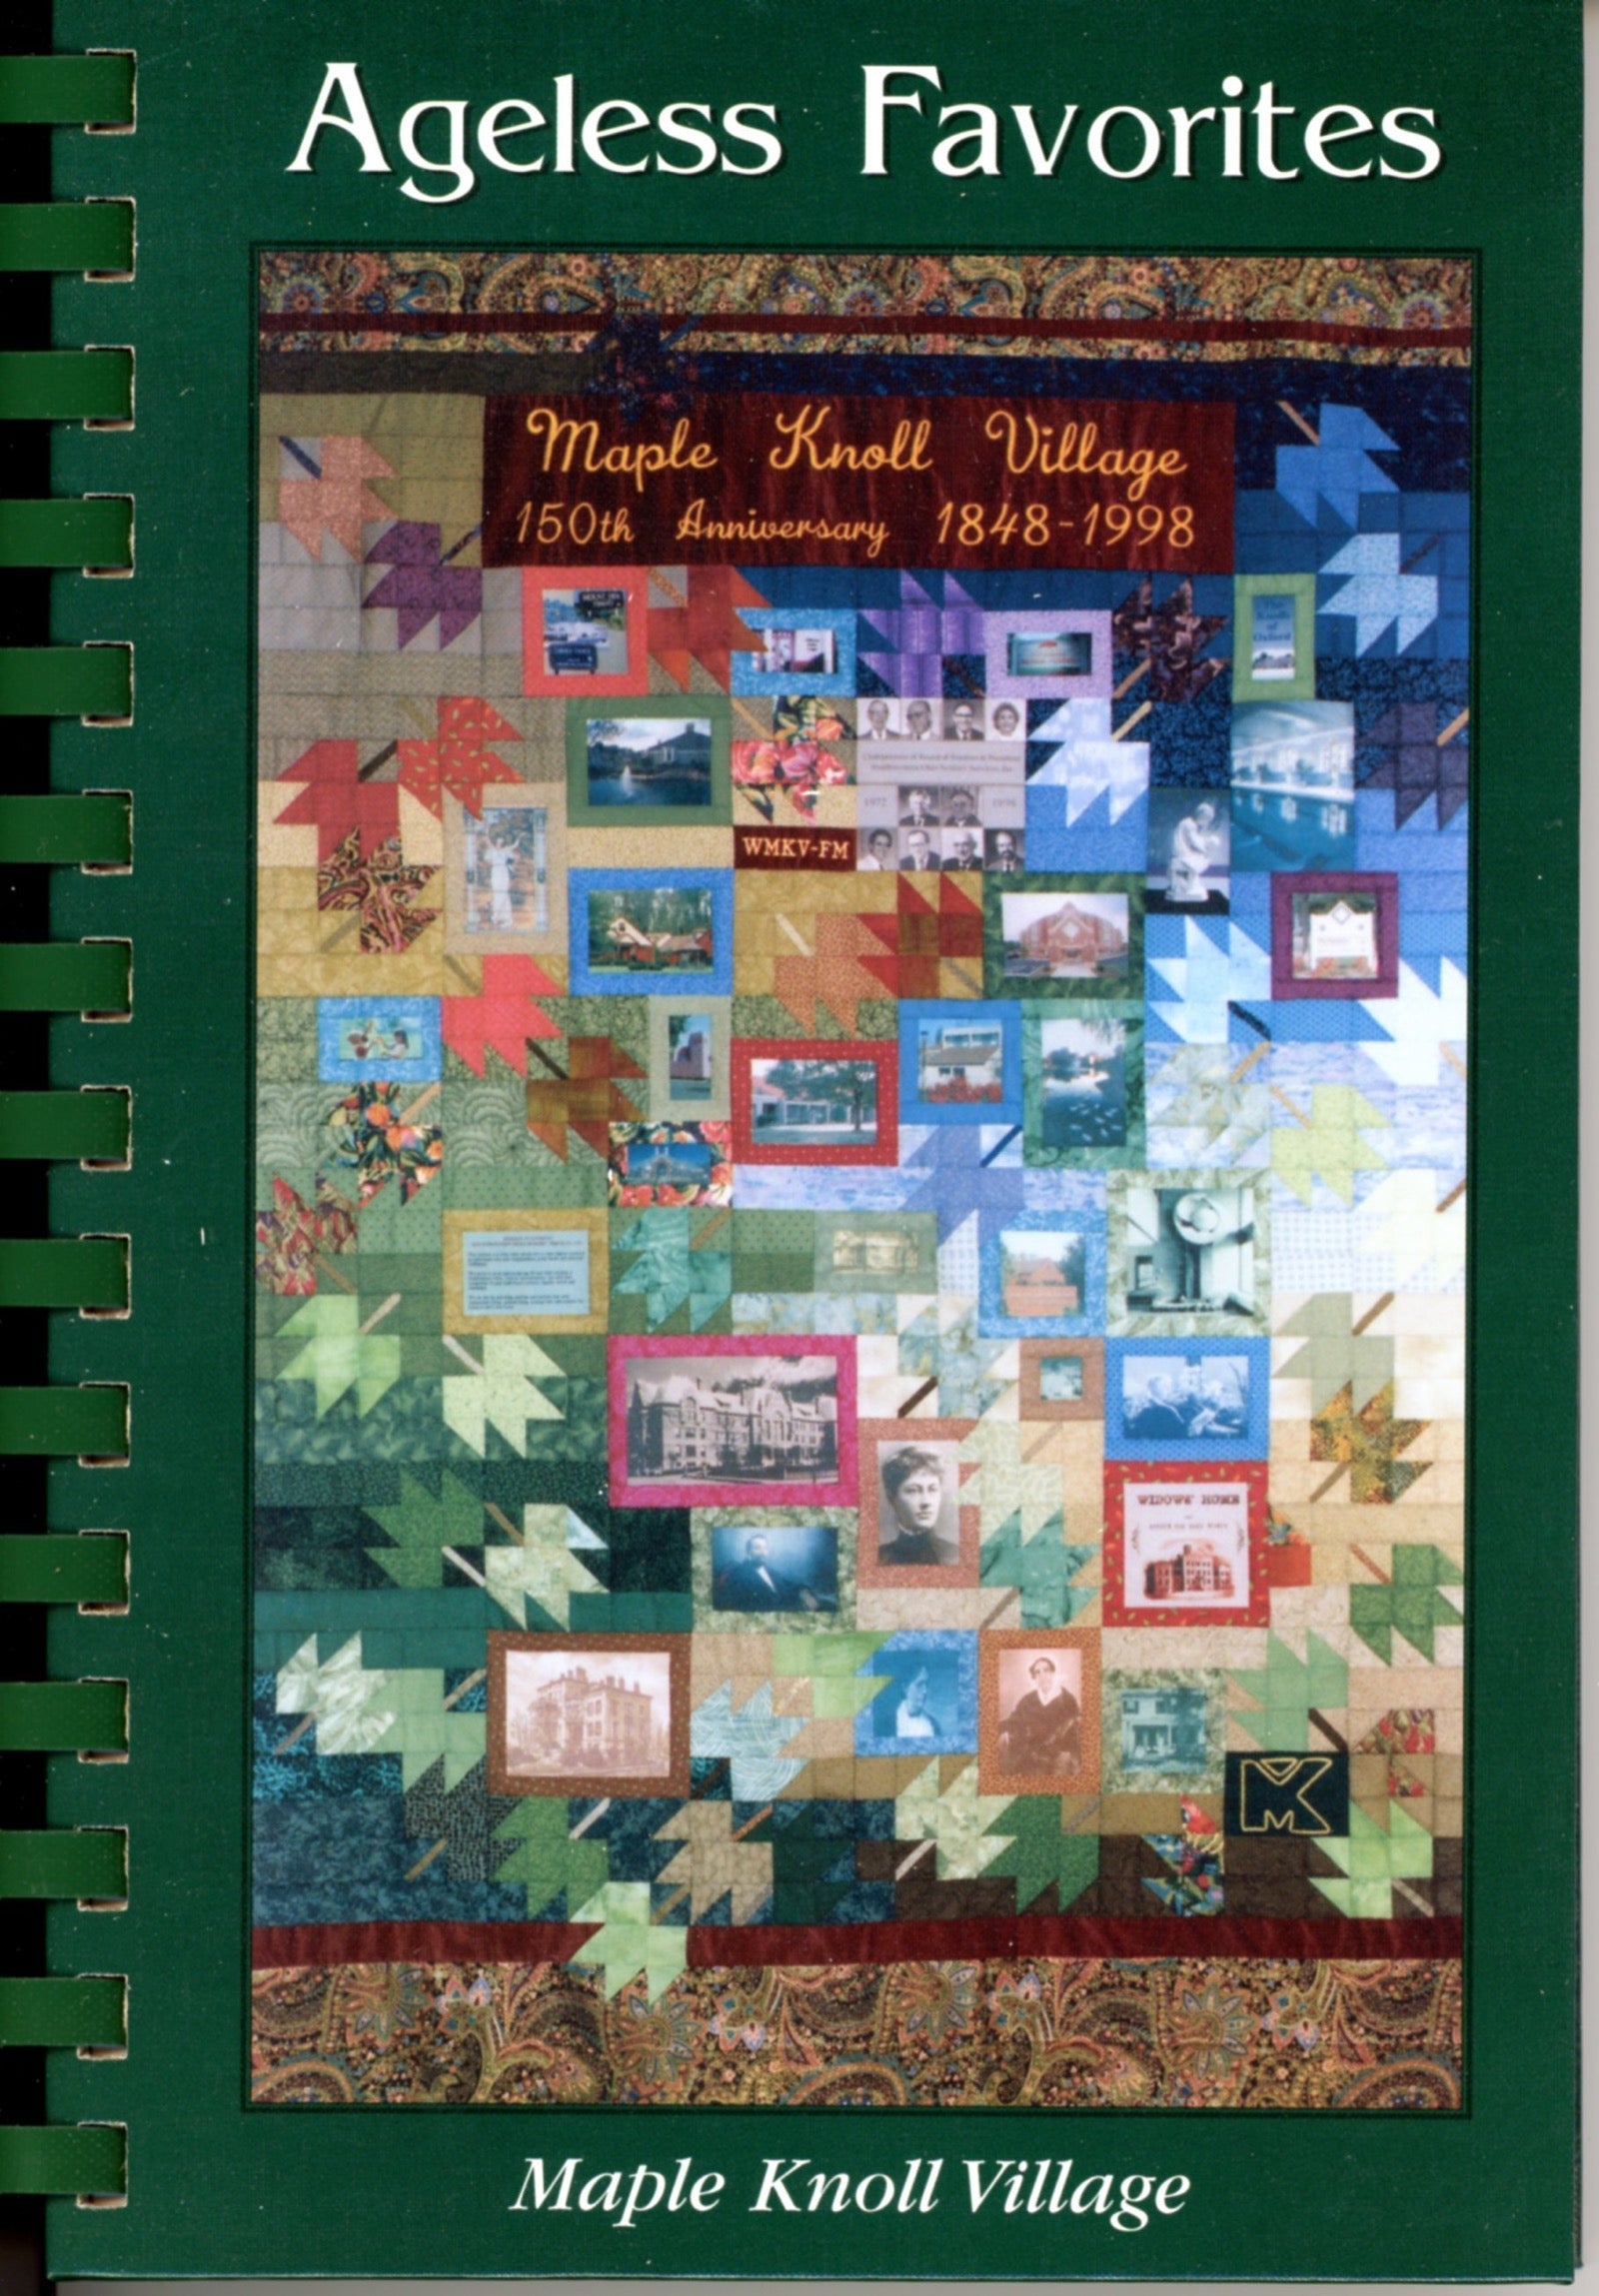 AGELESS FAVORITES: A Collection of Recipes | Maple Knoll Village | Cincinnati, Ohio | ©1999